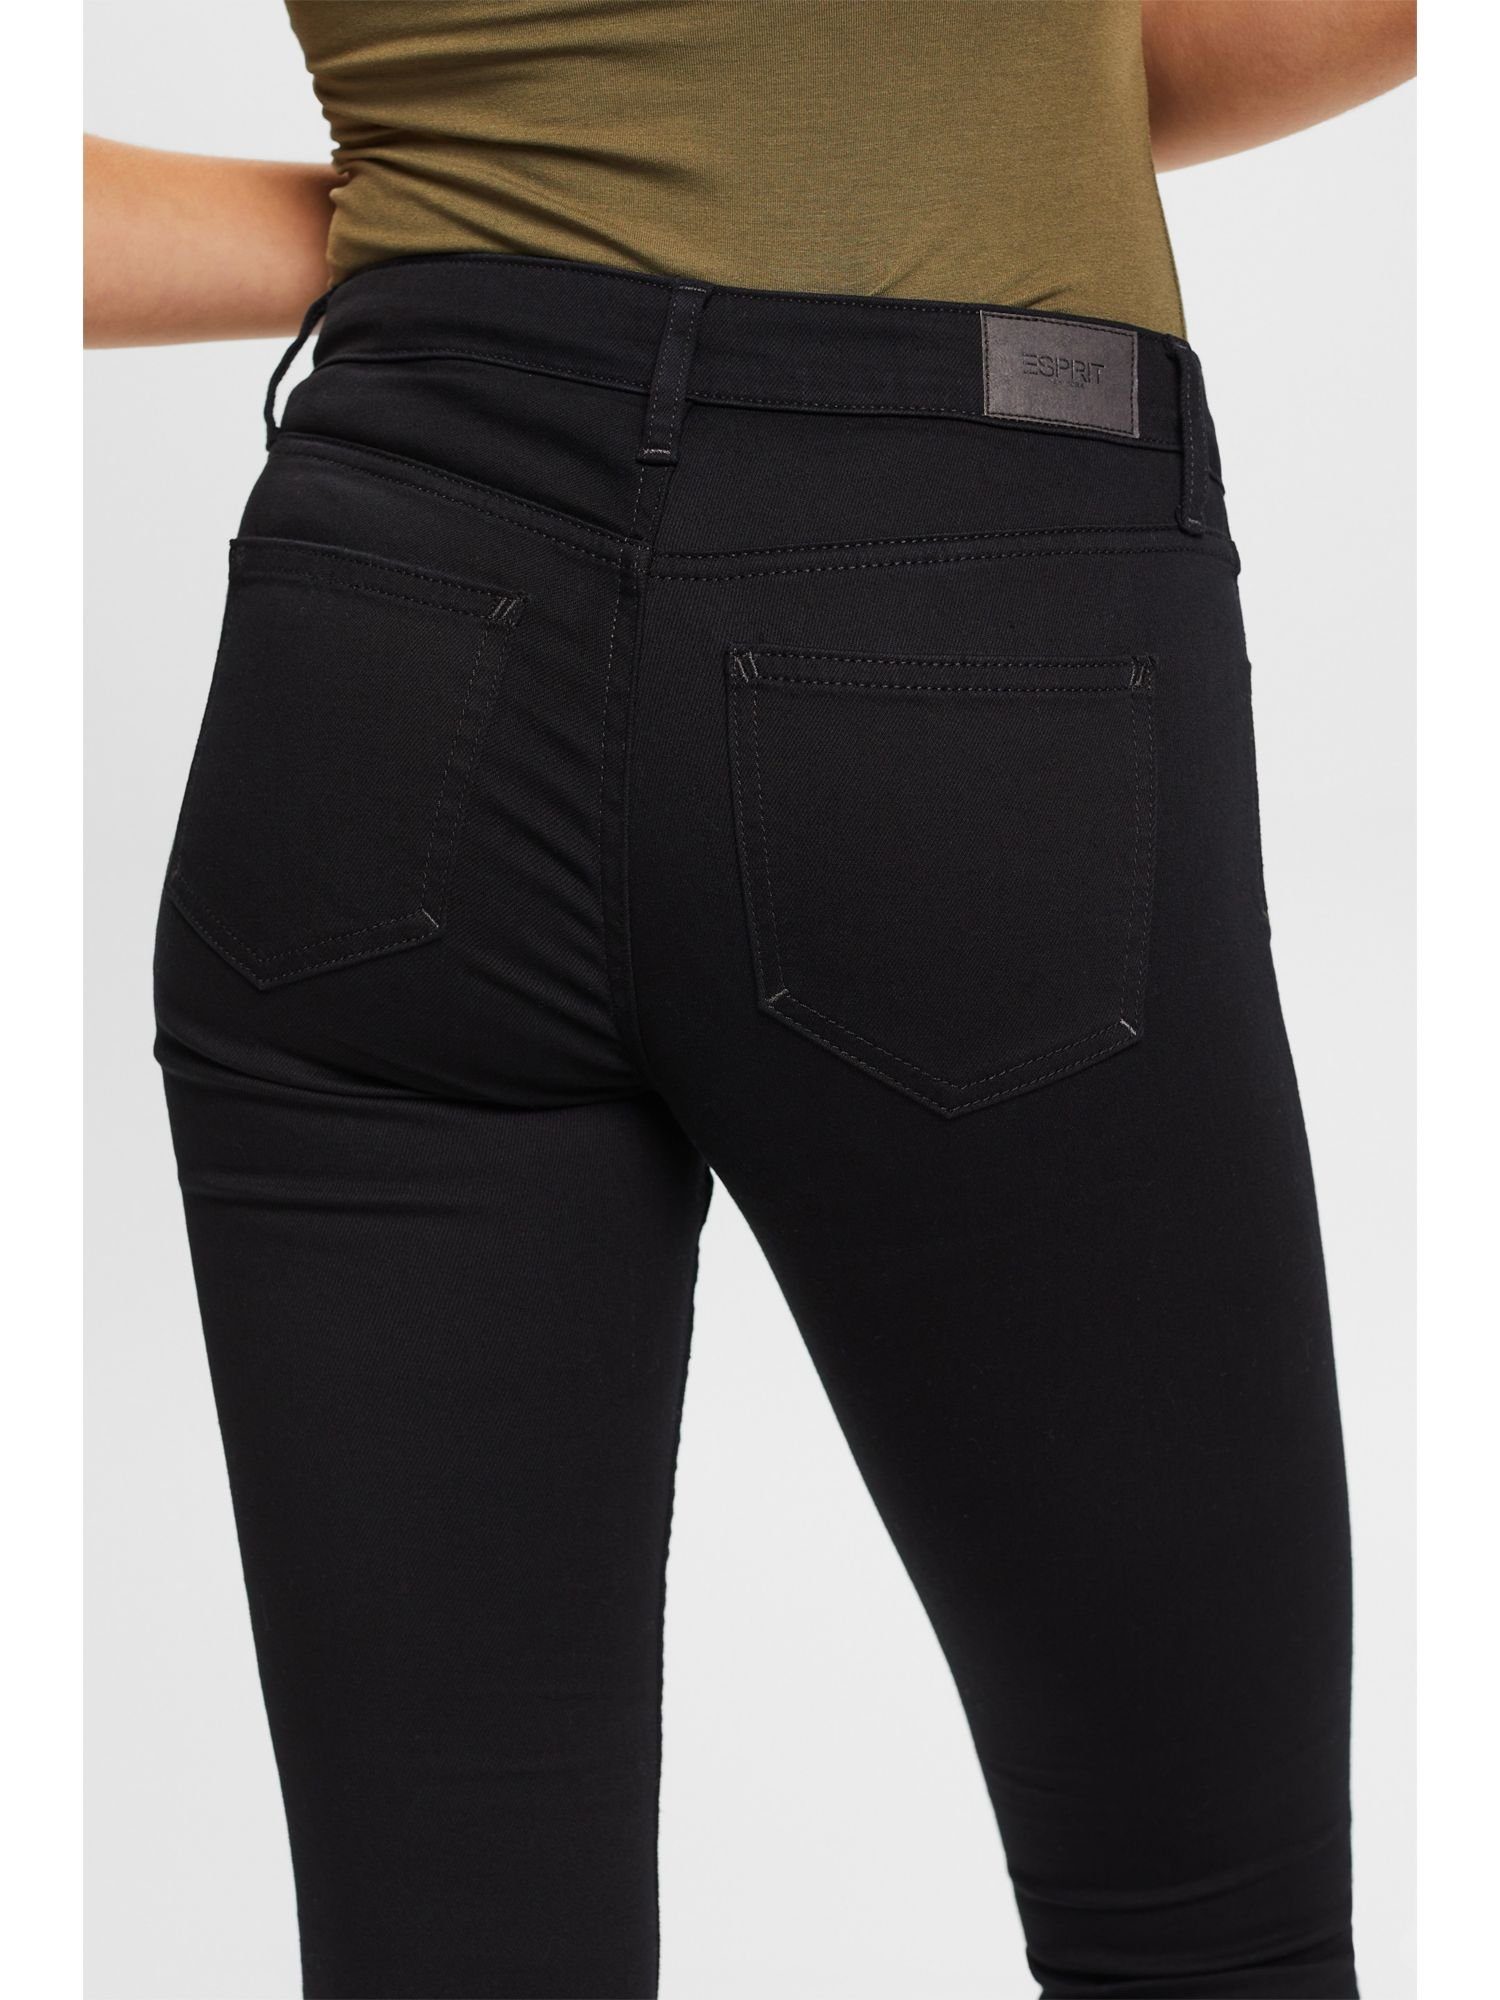 mit Recycelt: Esprit mittelhohem Skinny Bund Skinny-fit-Jeans Stretchjeans